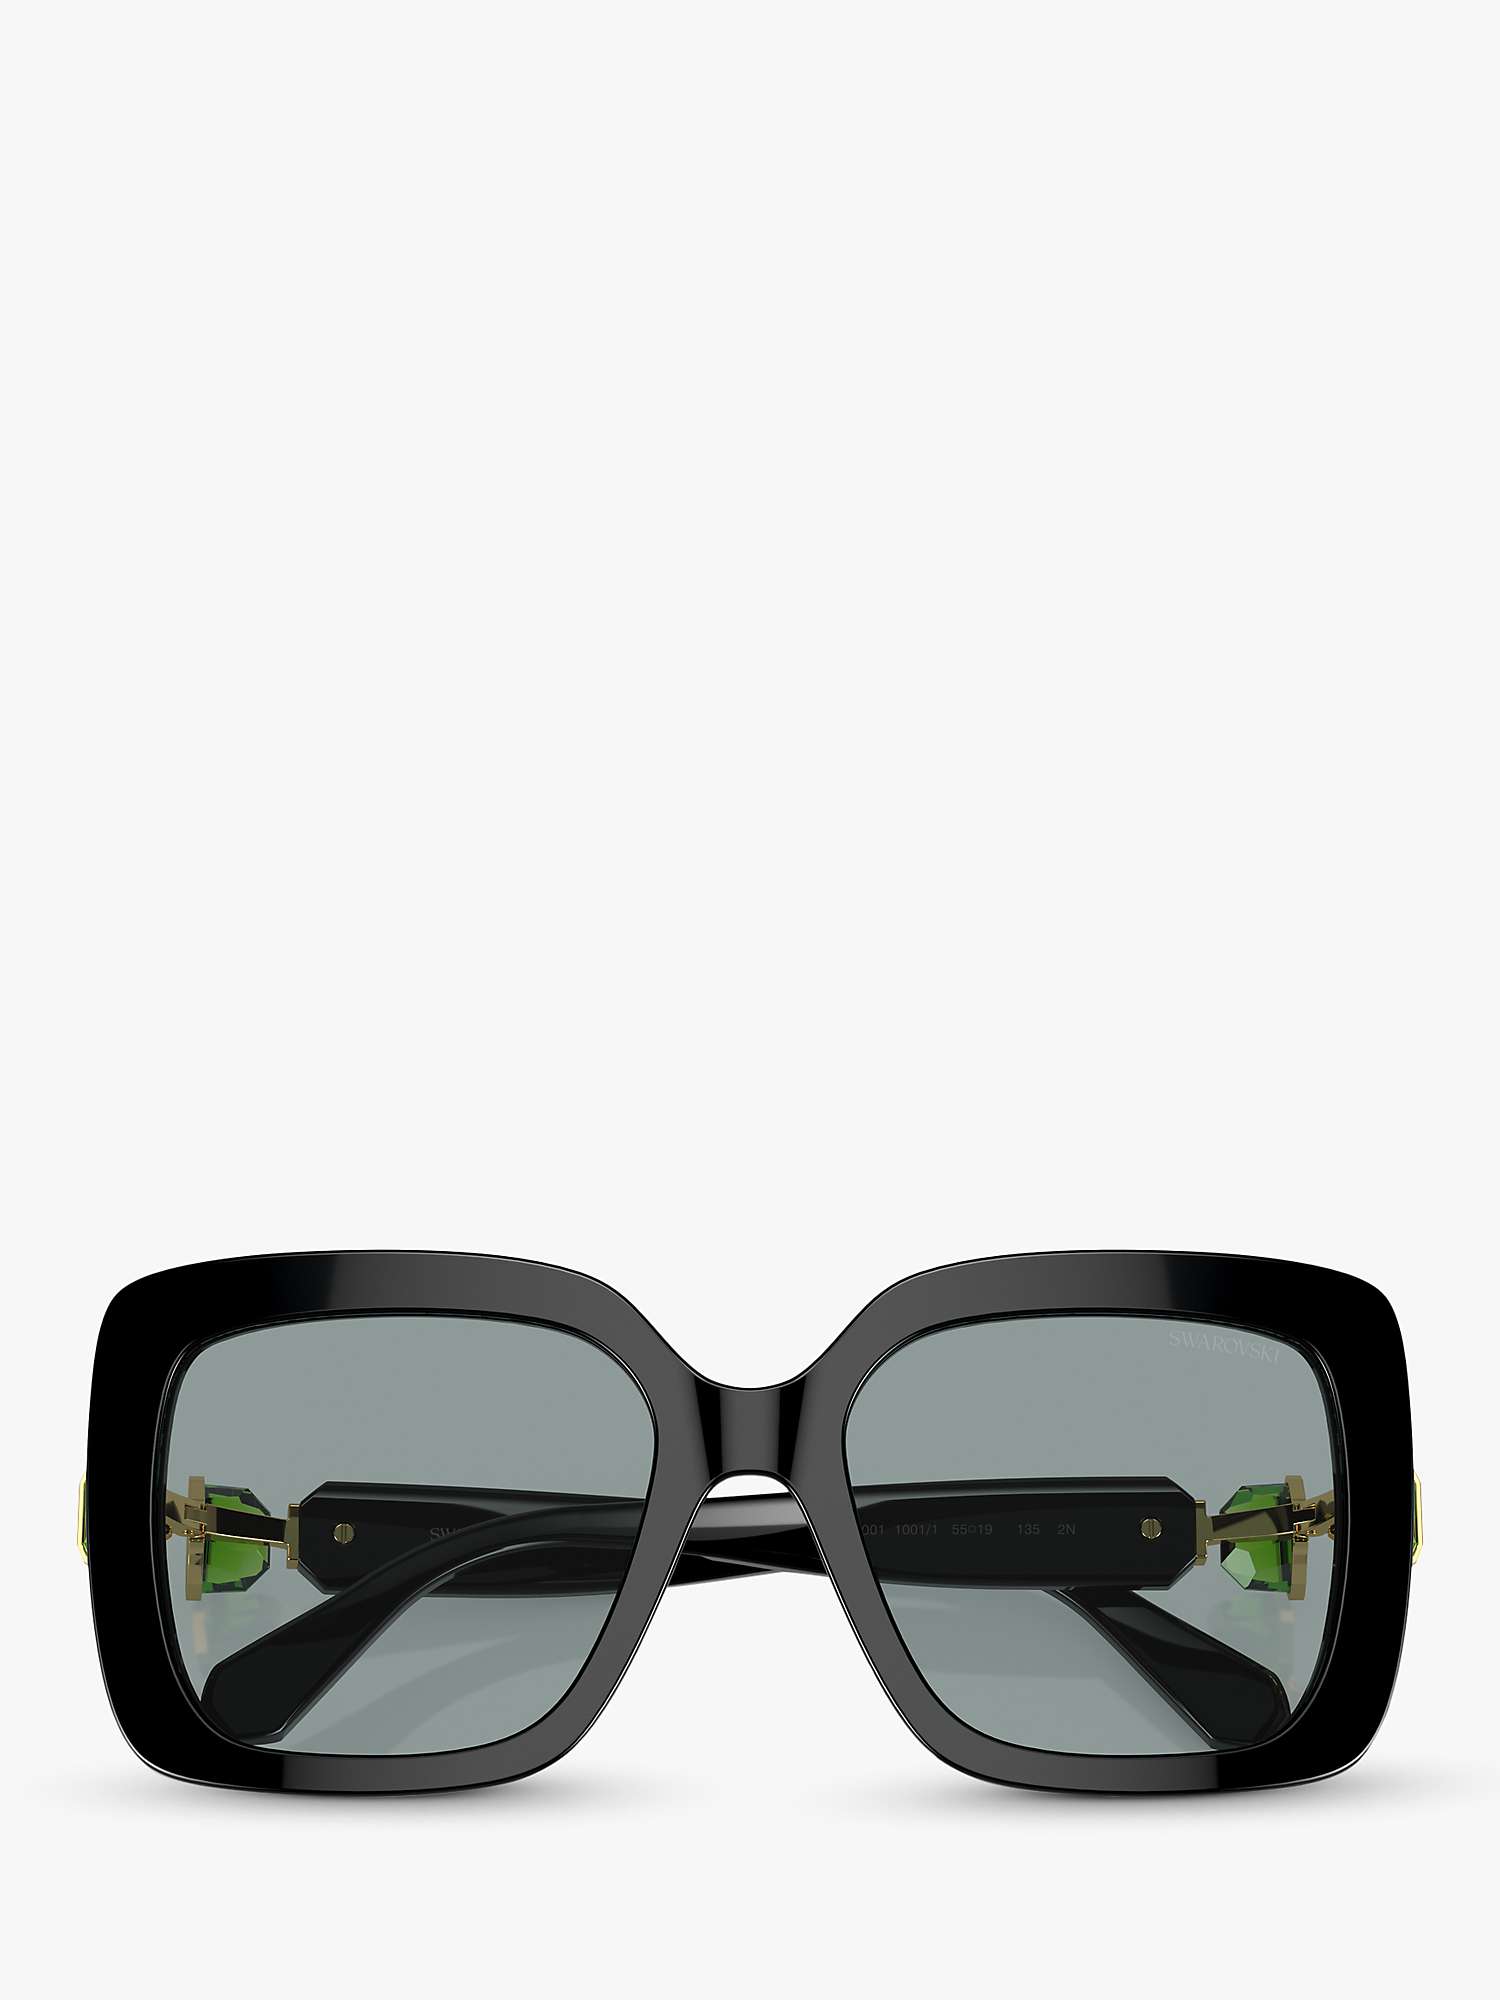 Buy Swarovski SK6001 Women's Square Sunglasses, Black/Grey Online at johnlewis.com